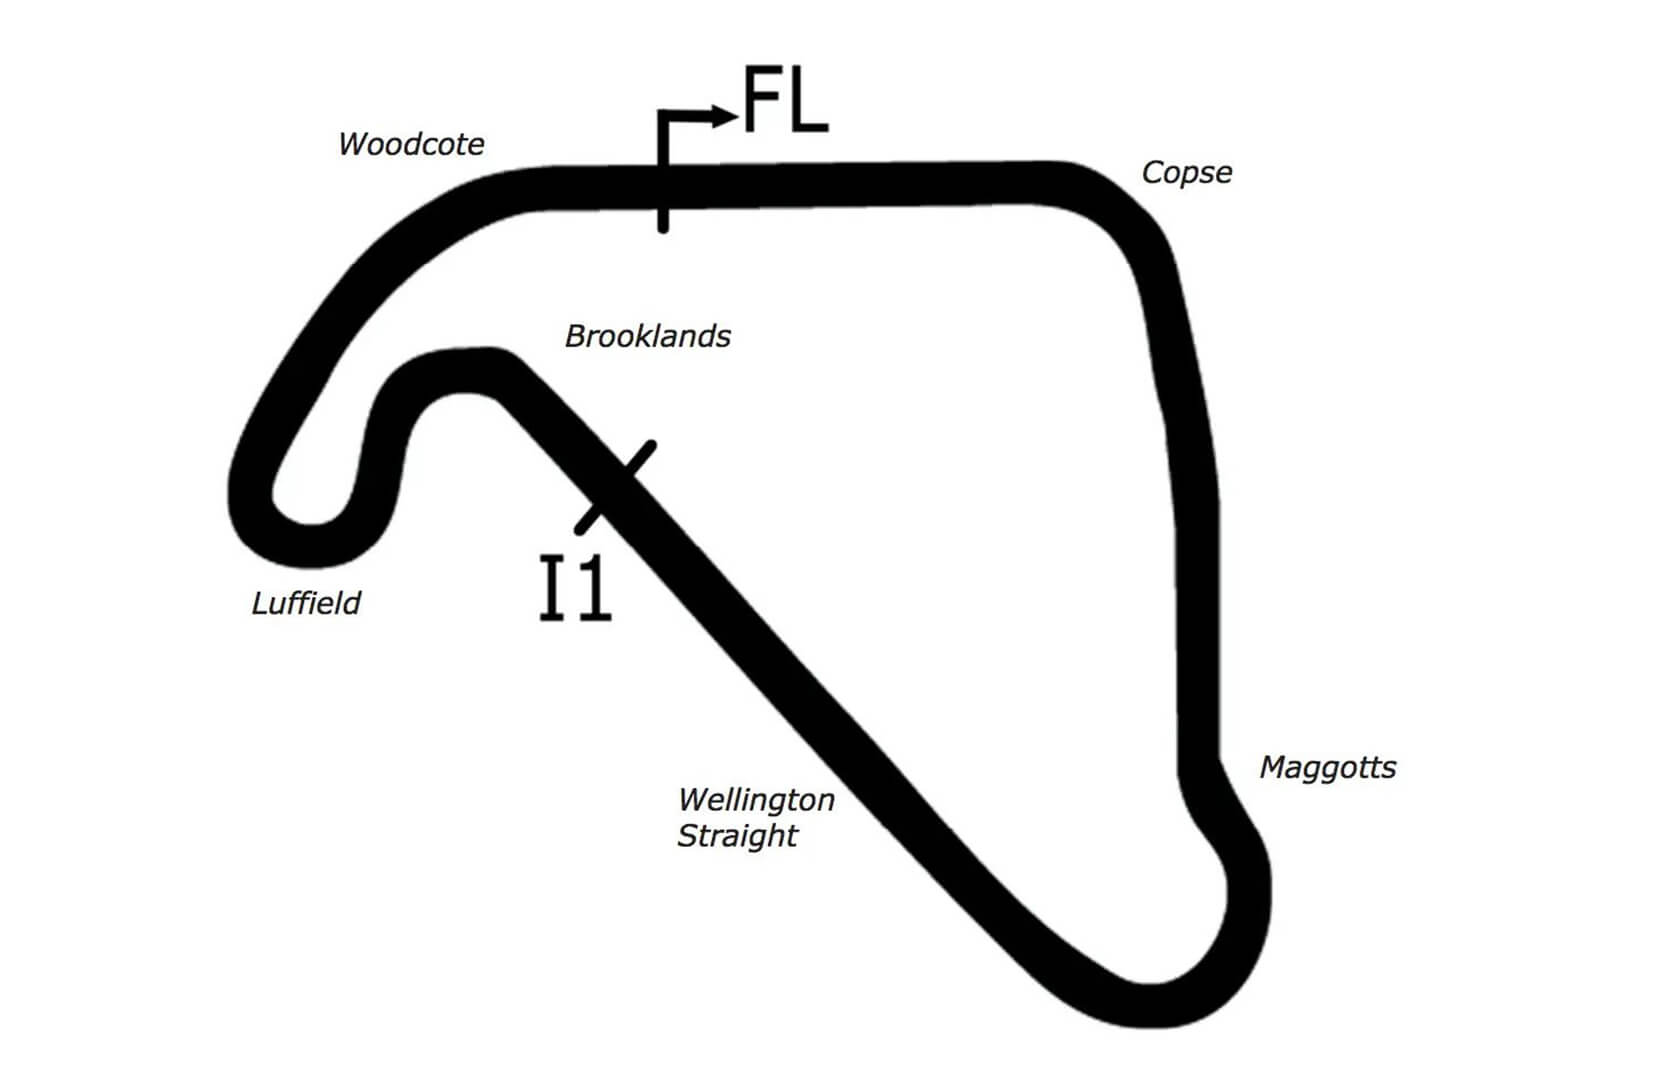 Silverstone National Circuit